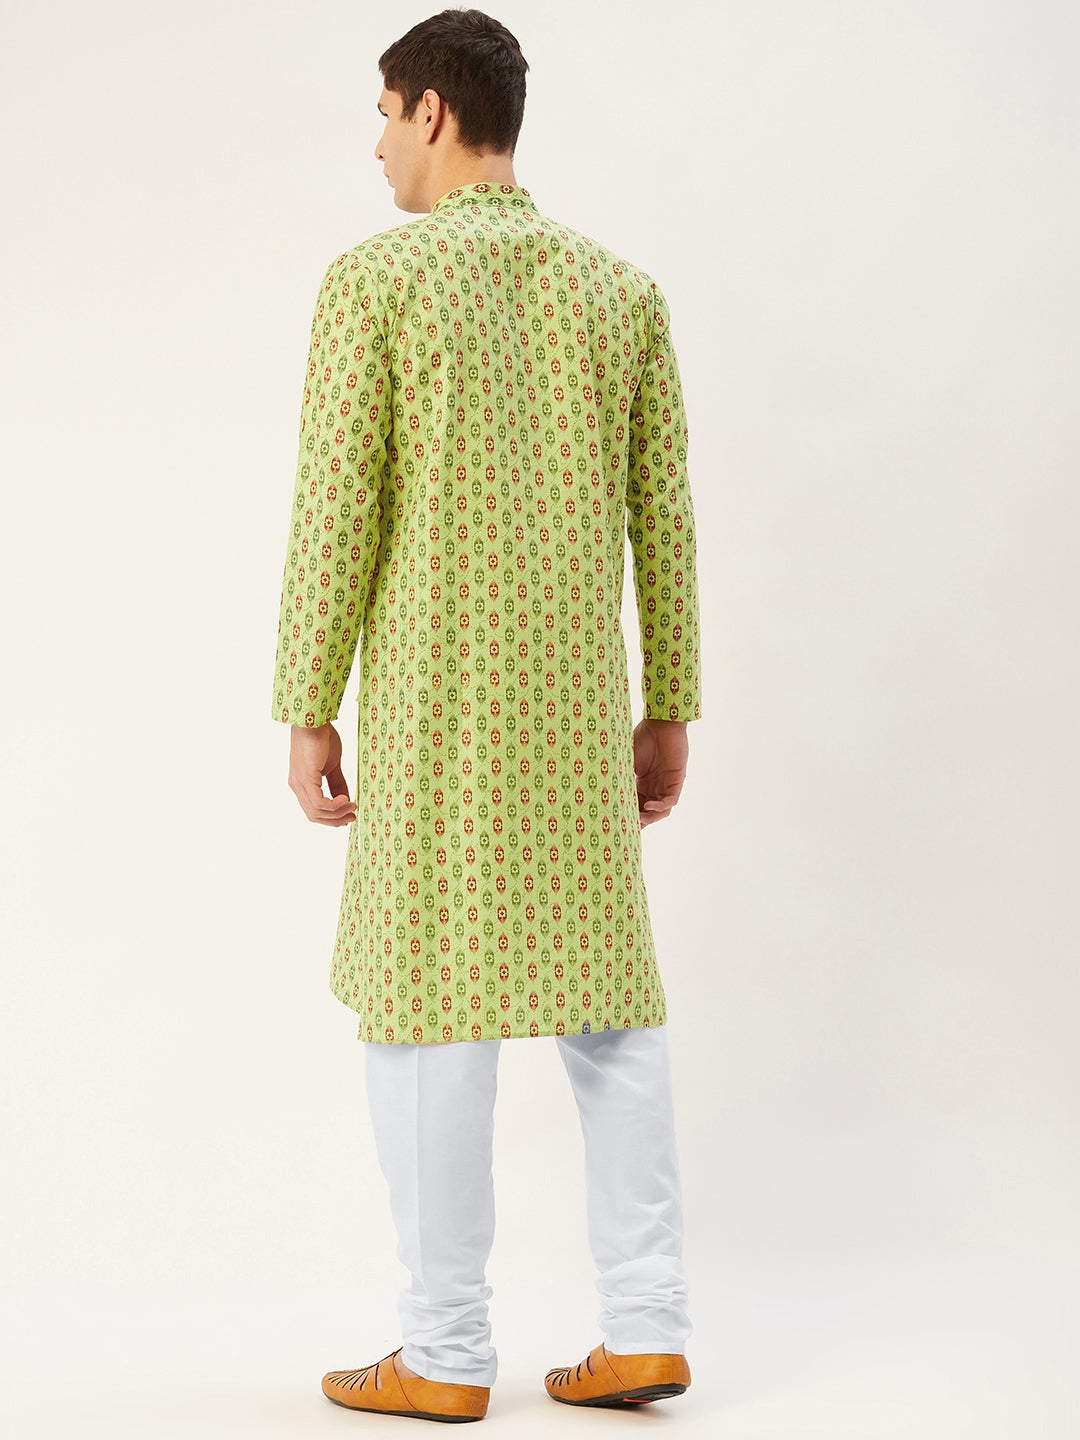 Jompers Men's Green Cotton Ikat printed kurta Pyjama Set